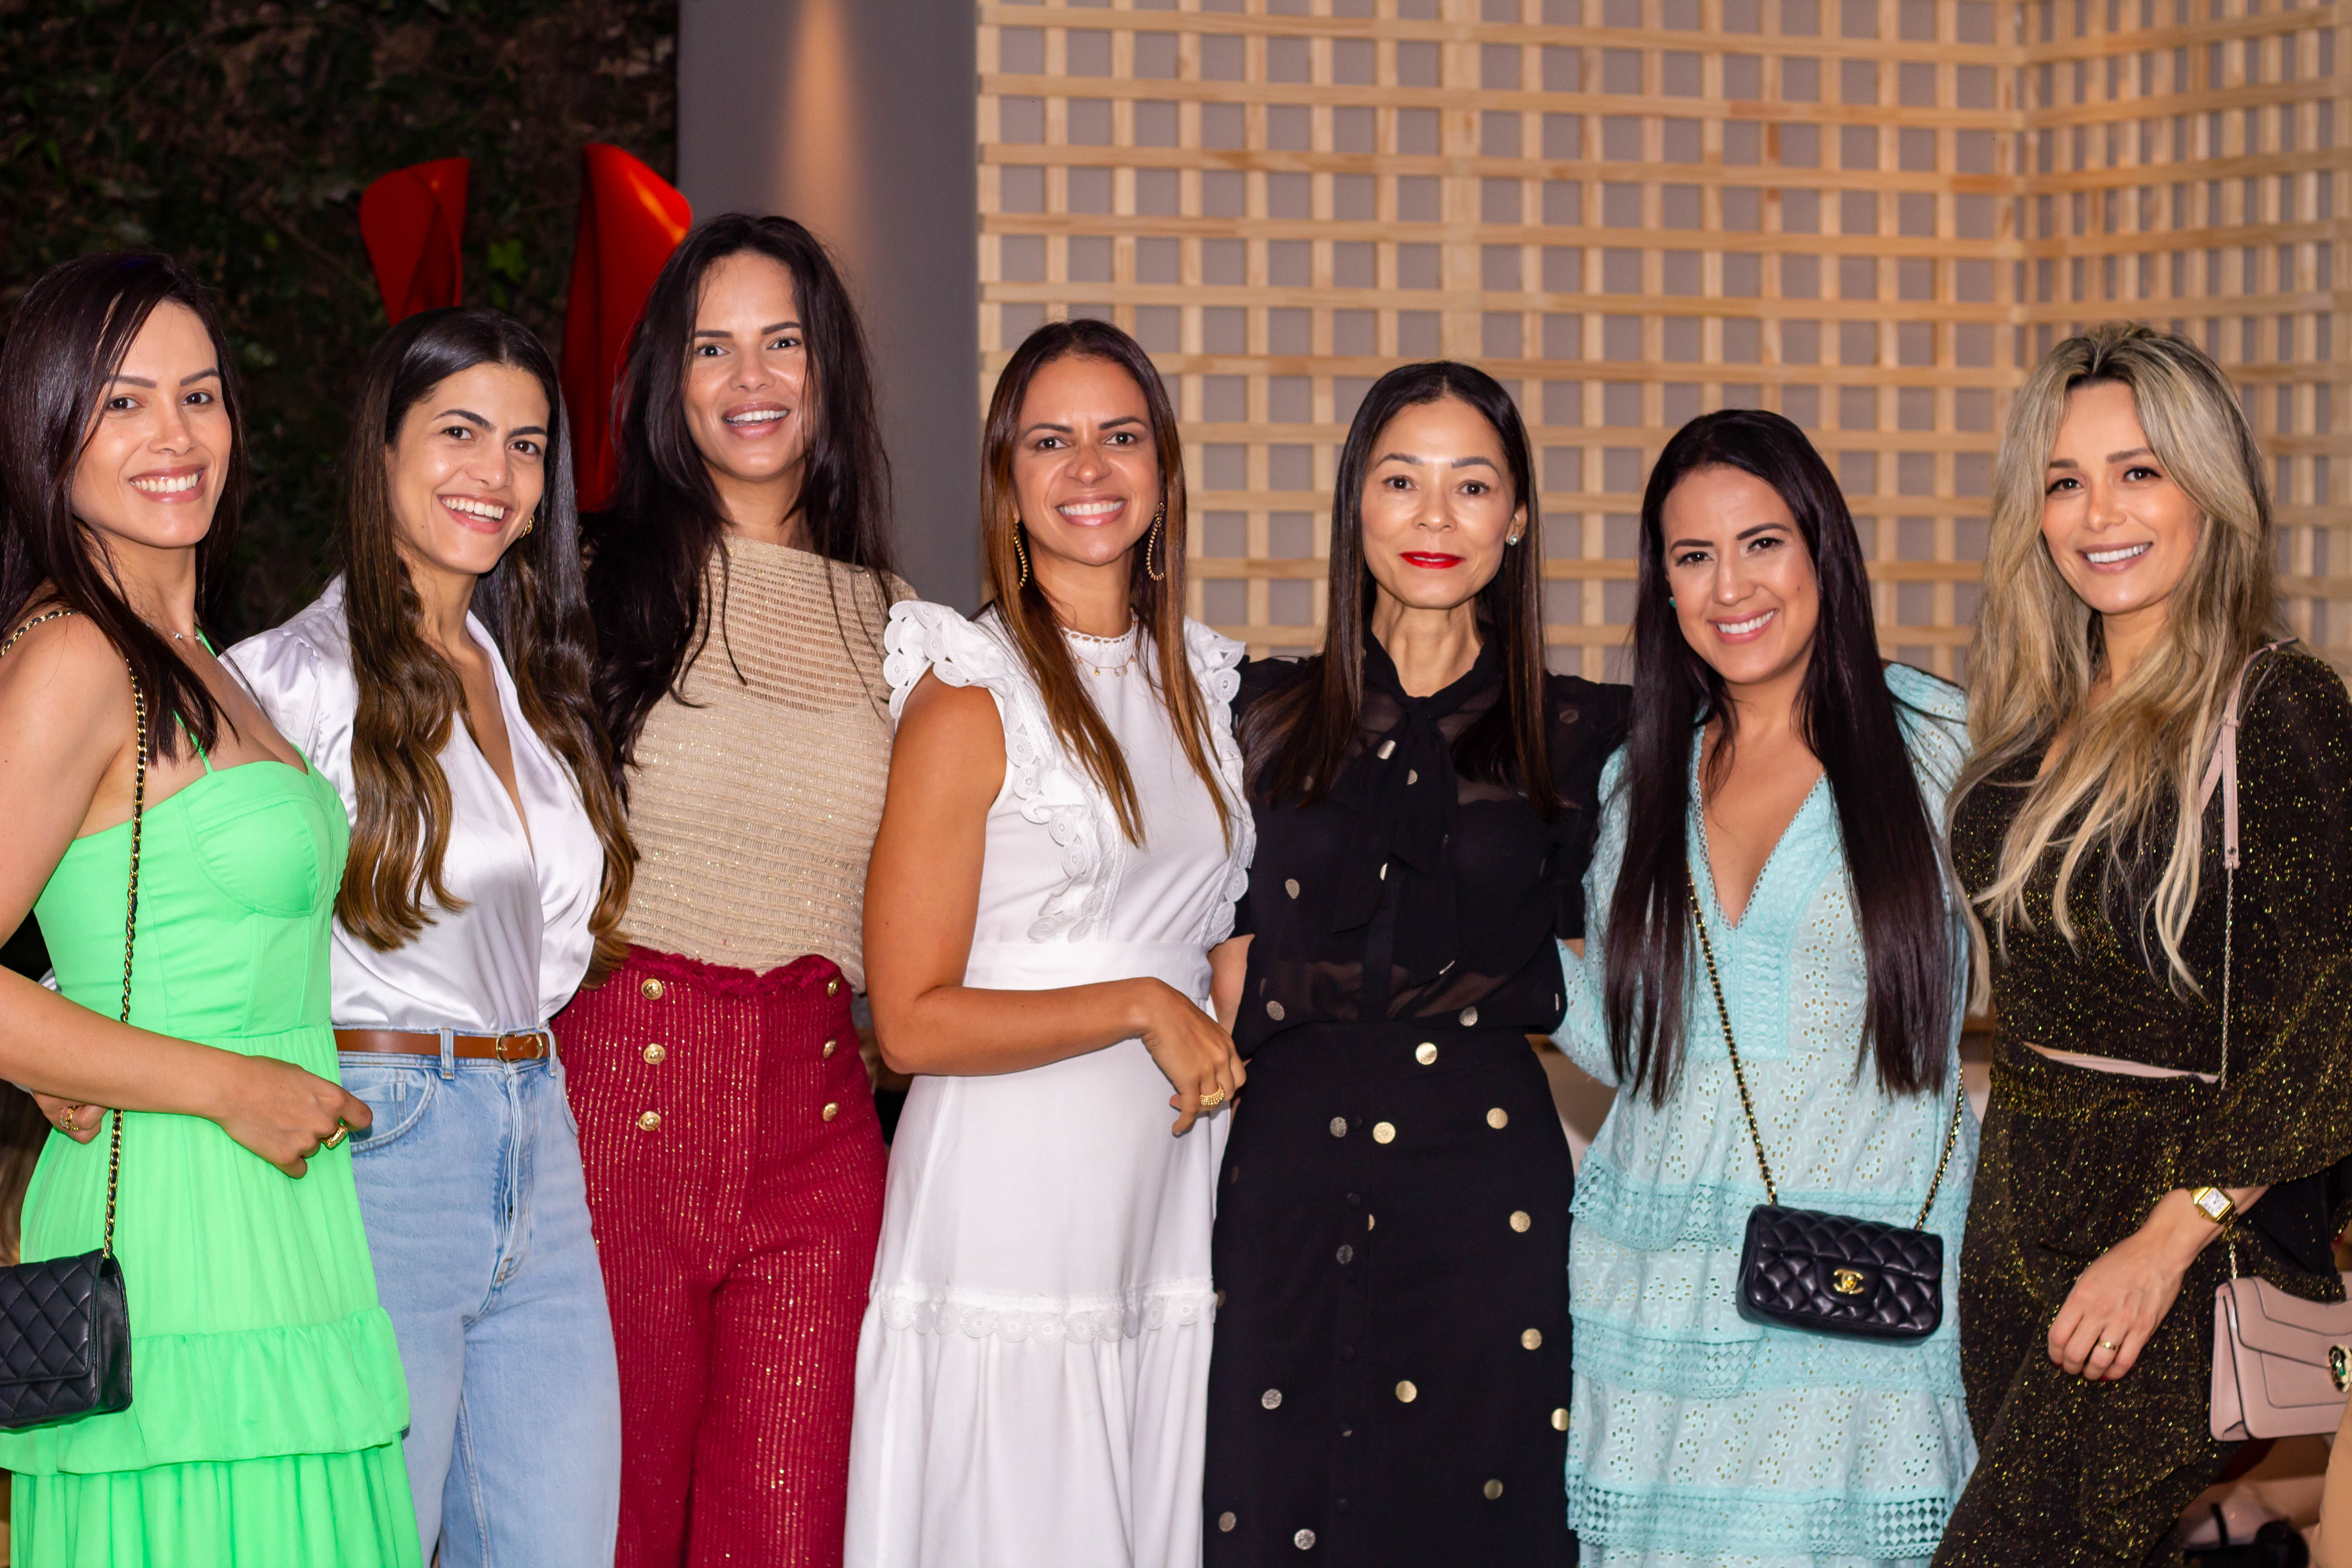 Thammy Miranda, Maria Clara Caliope, Luzia Botta, Josi Bastos, Talita Oliveira, Ana Paula e Ana Claudia Nonato